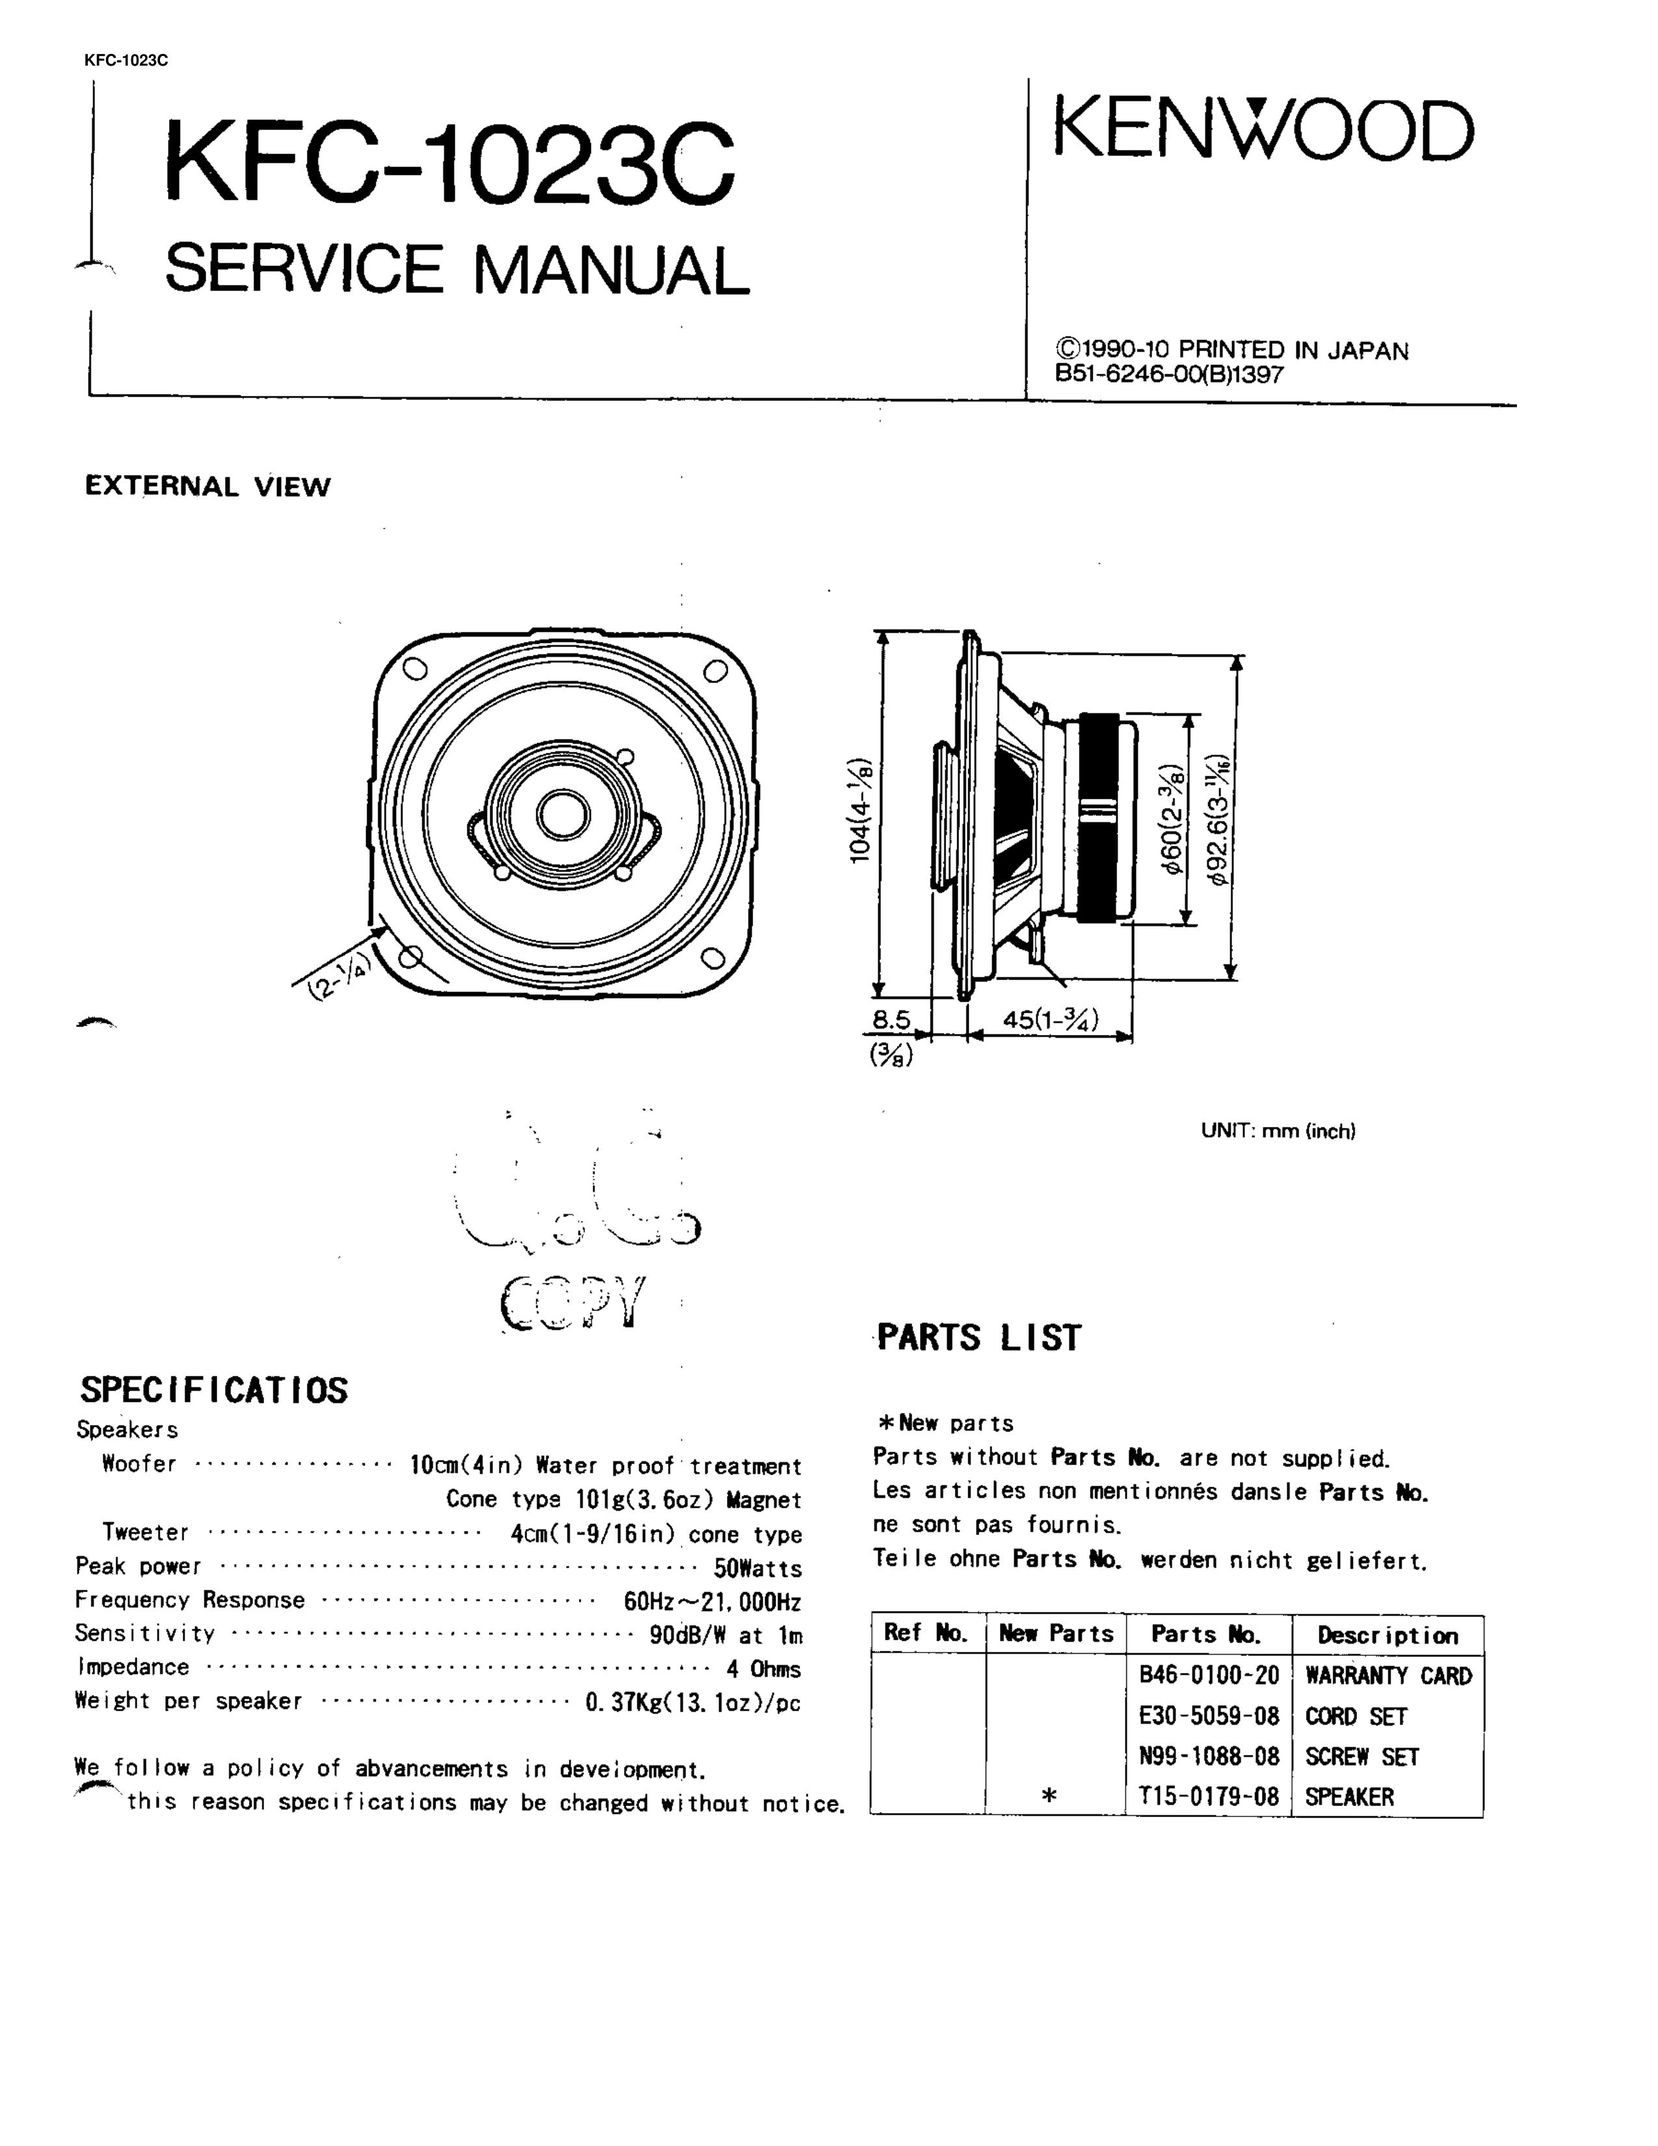 Kenwood KFC-1023C Car Speaker User Manual